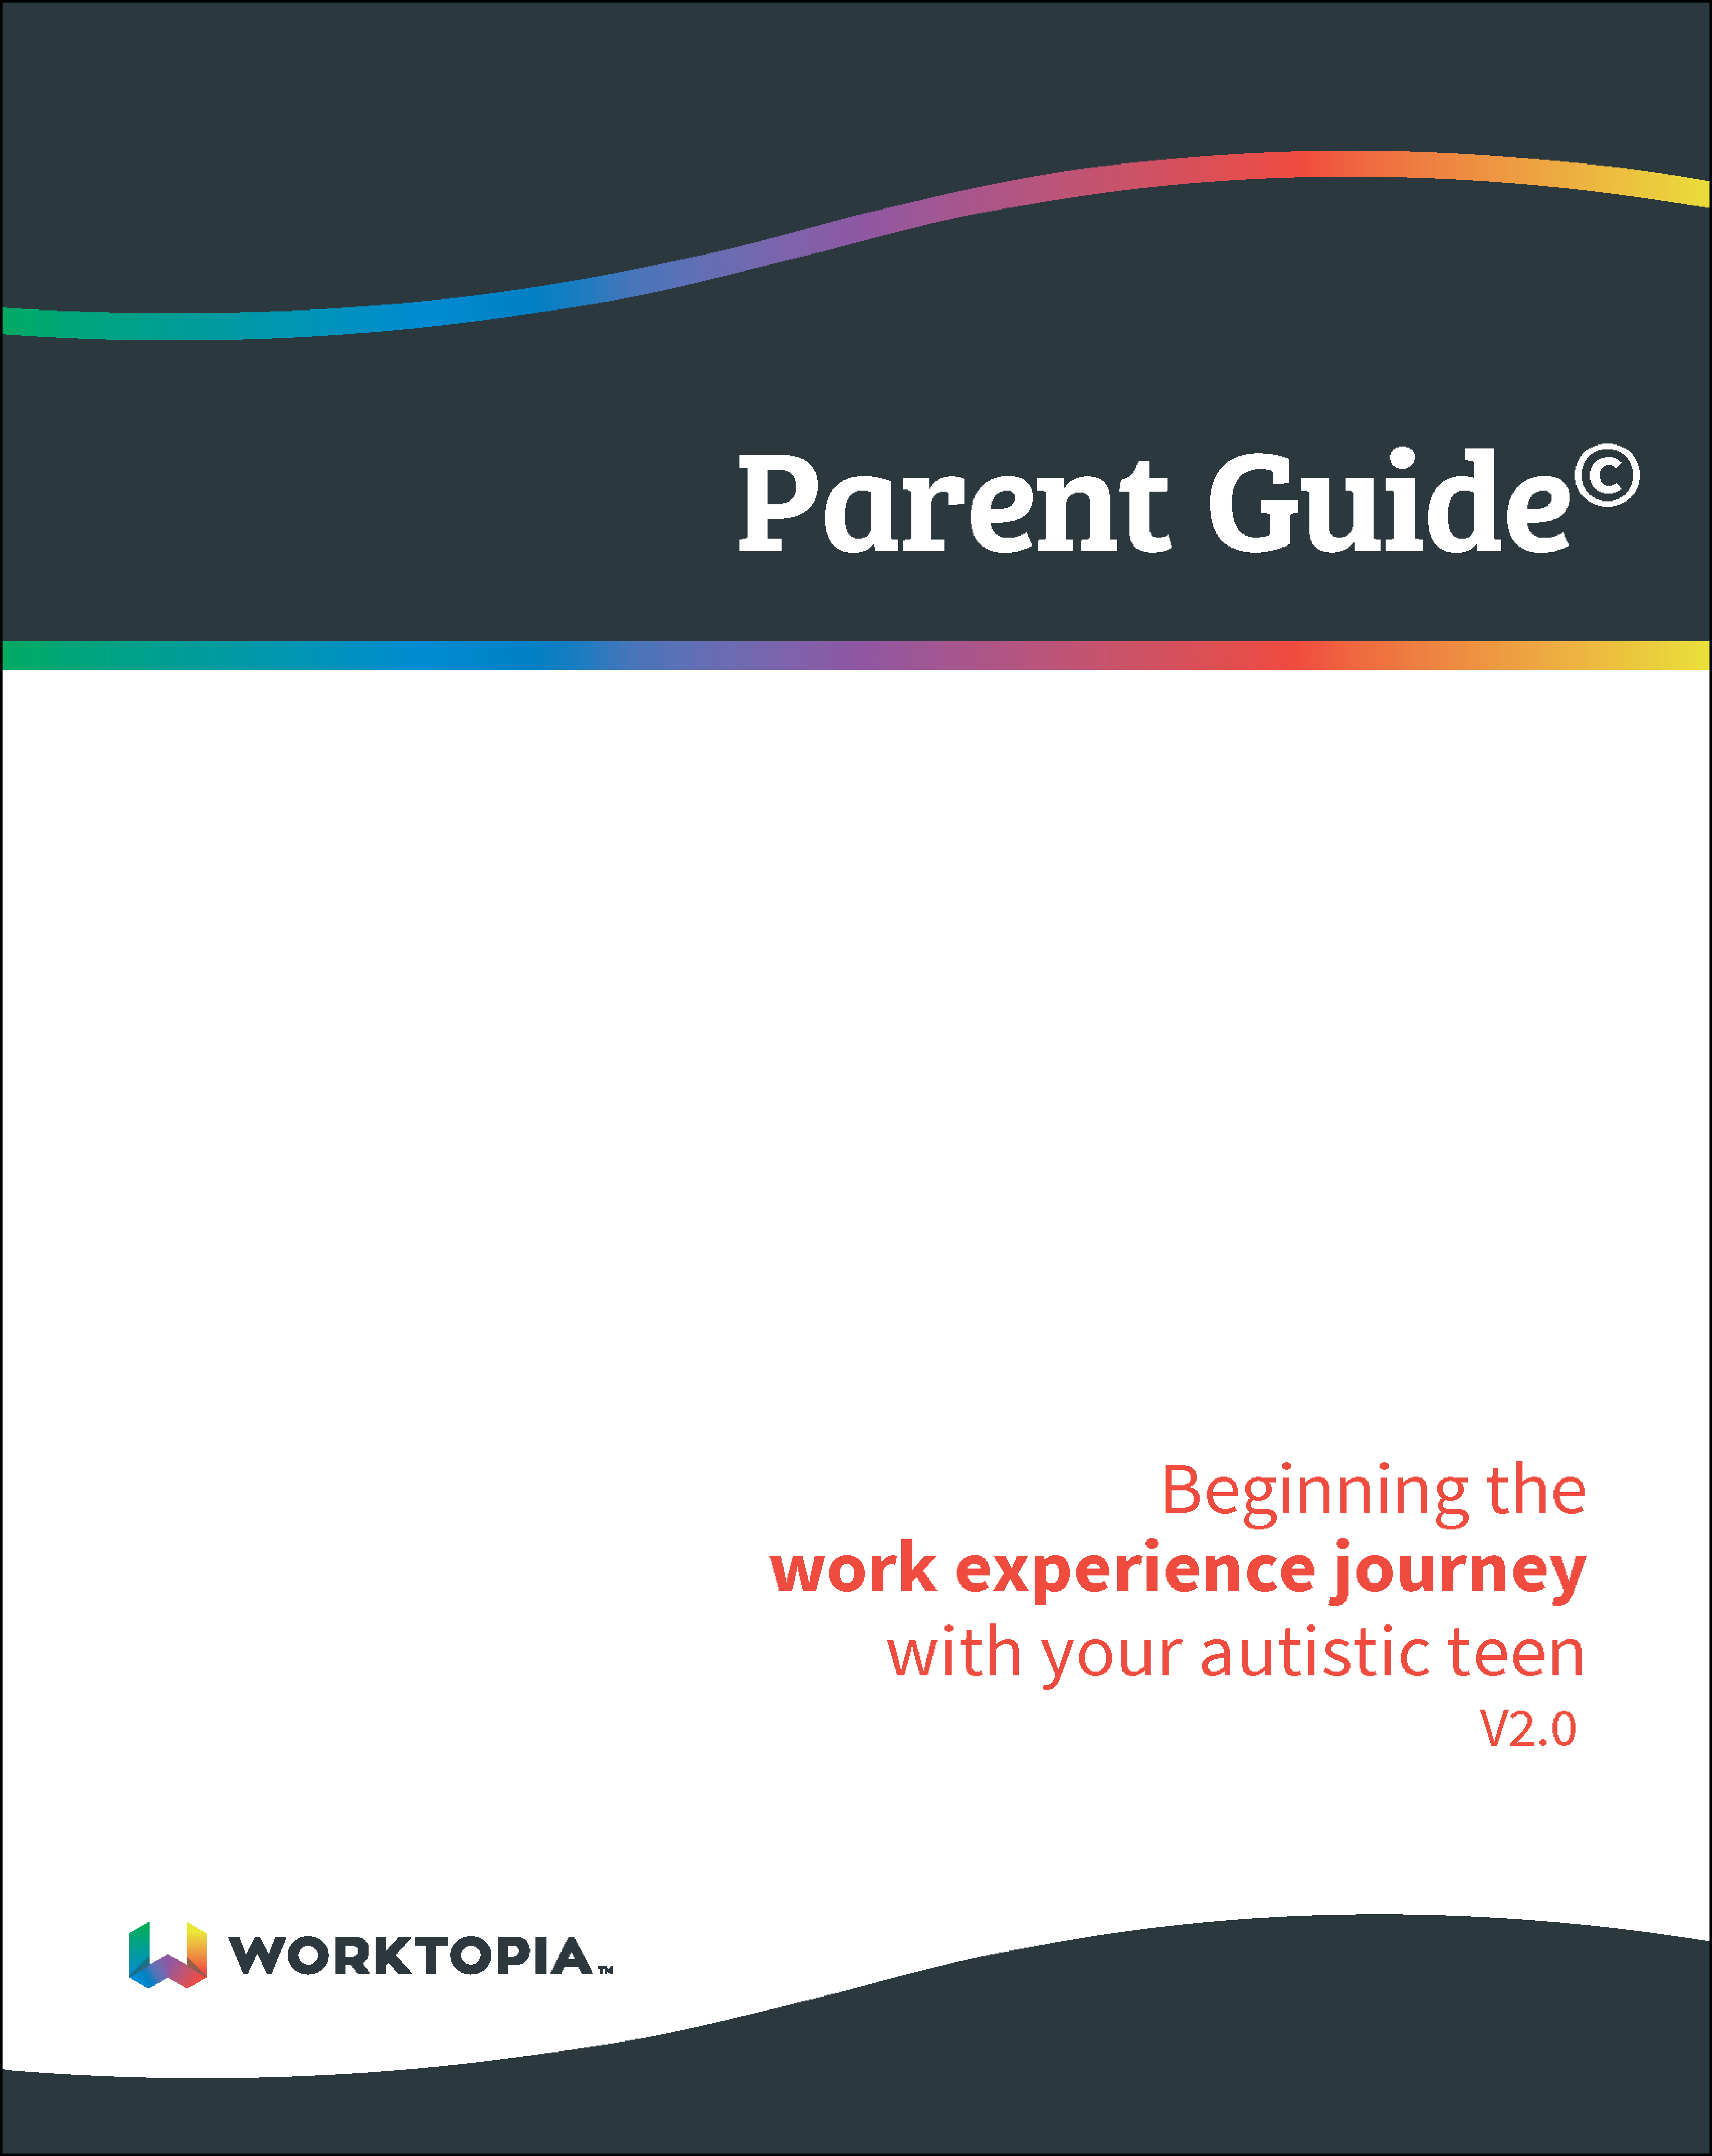 Worktopia parent guide v2.0